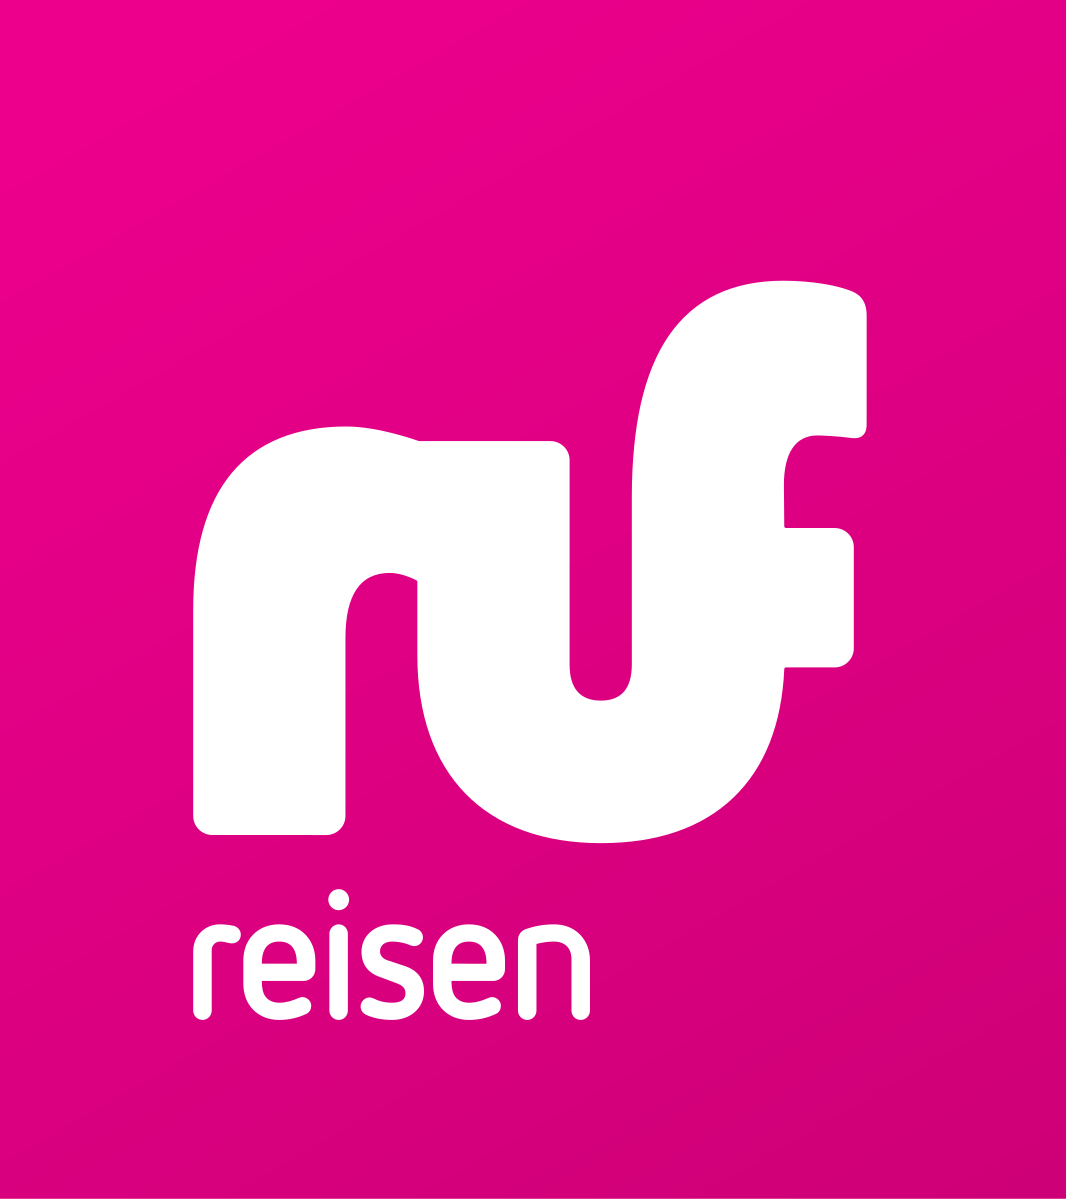 File:Ruf Reisen logo.svg.